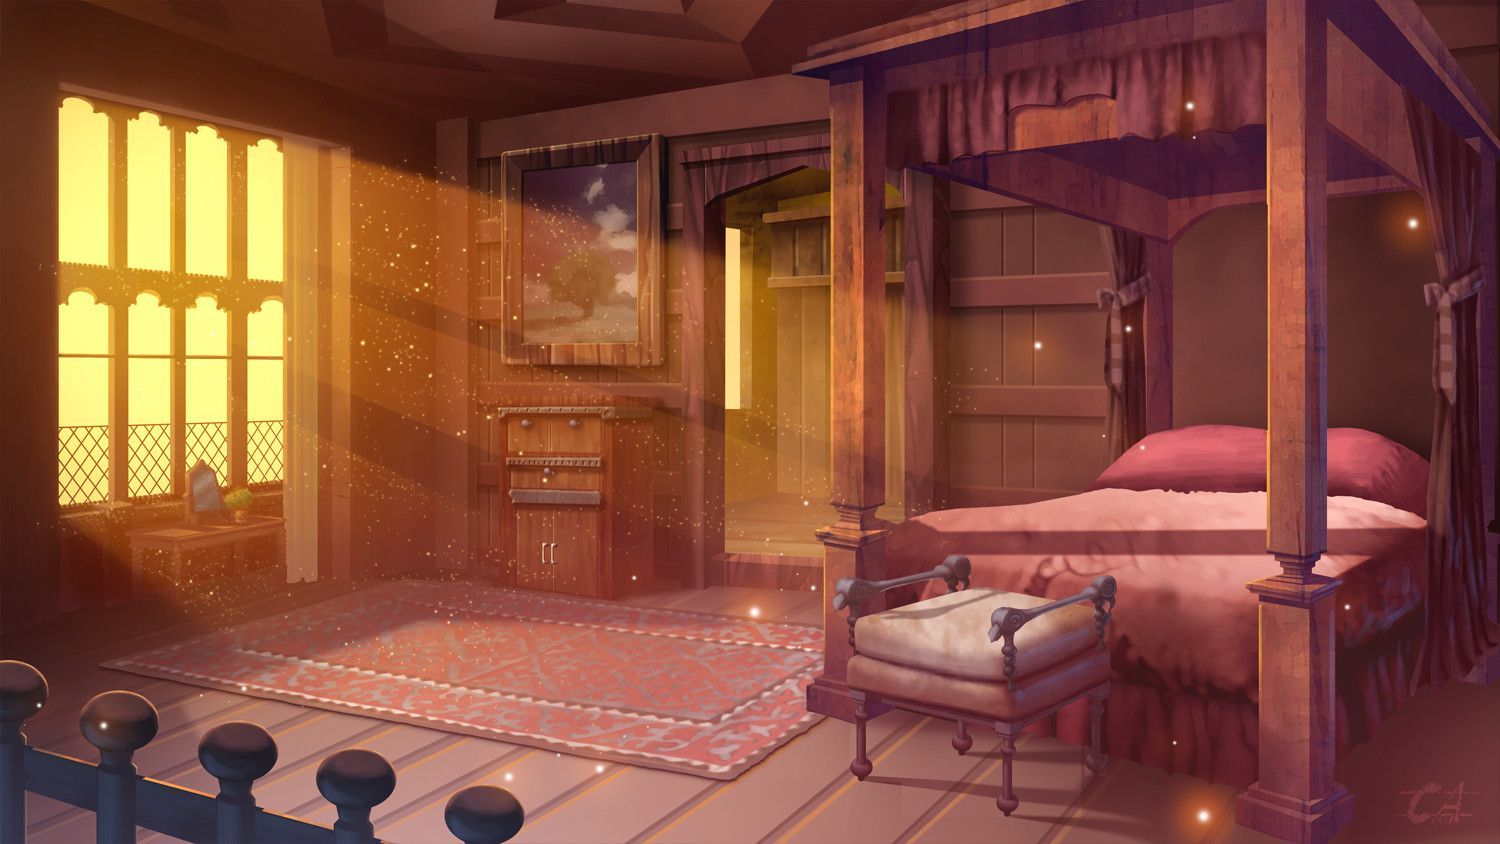 Mansion Bedroom. Mansion bedroom, Anime scenery wallpaper, Anime background